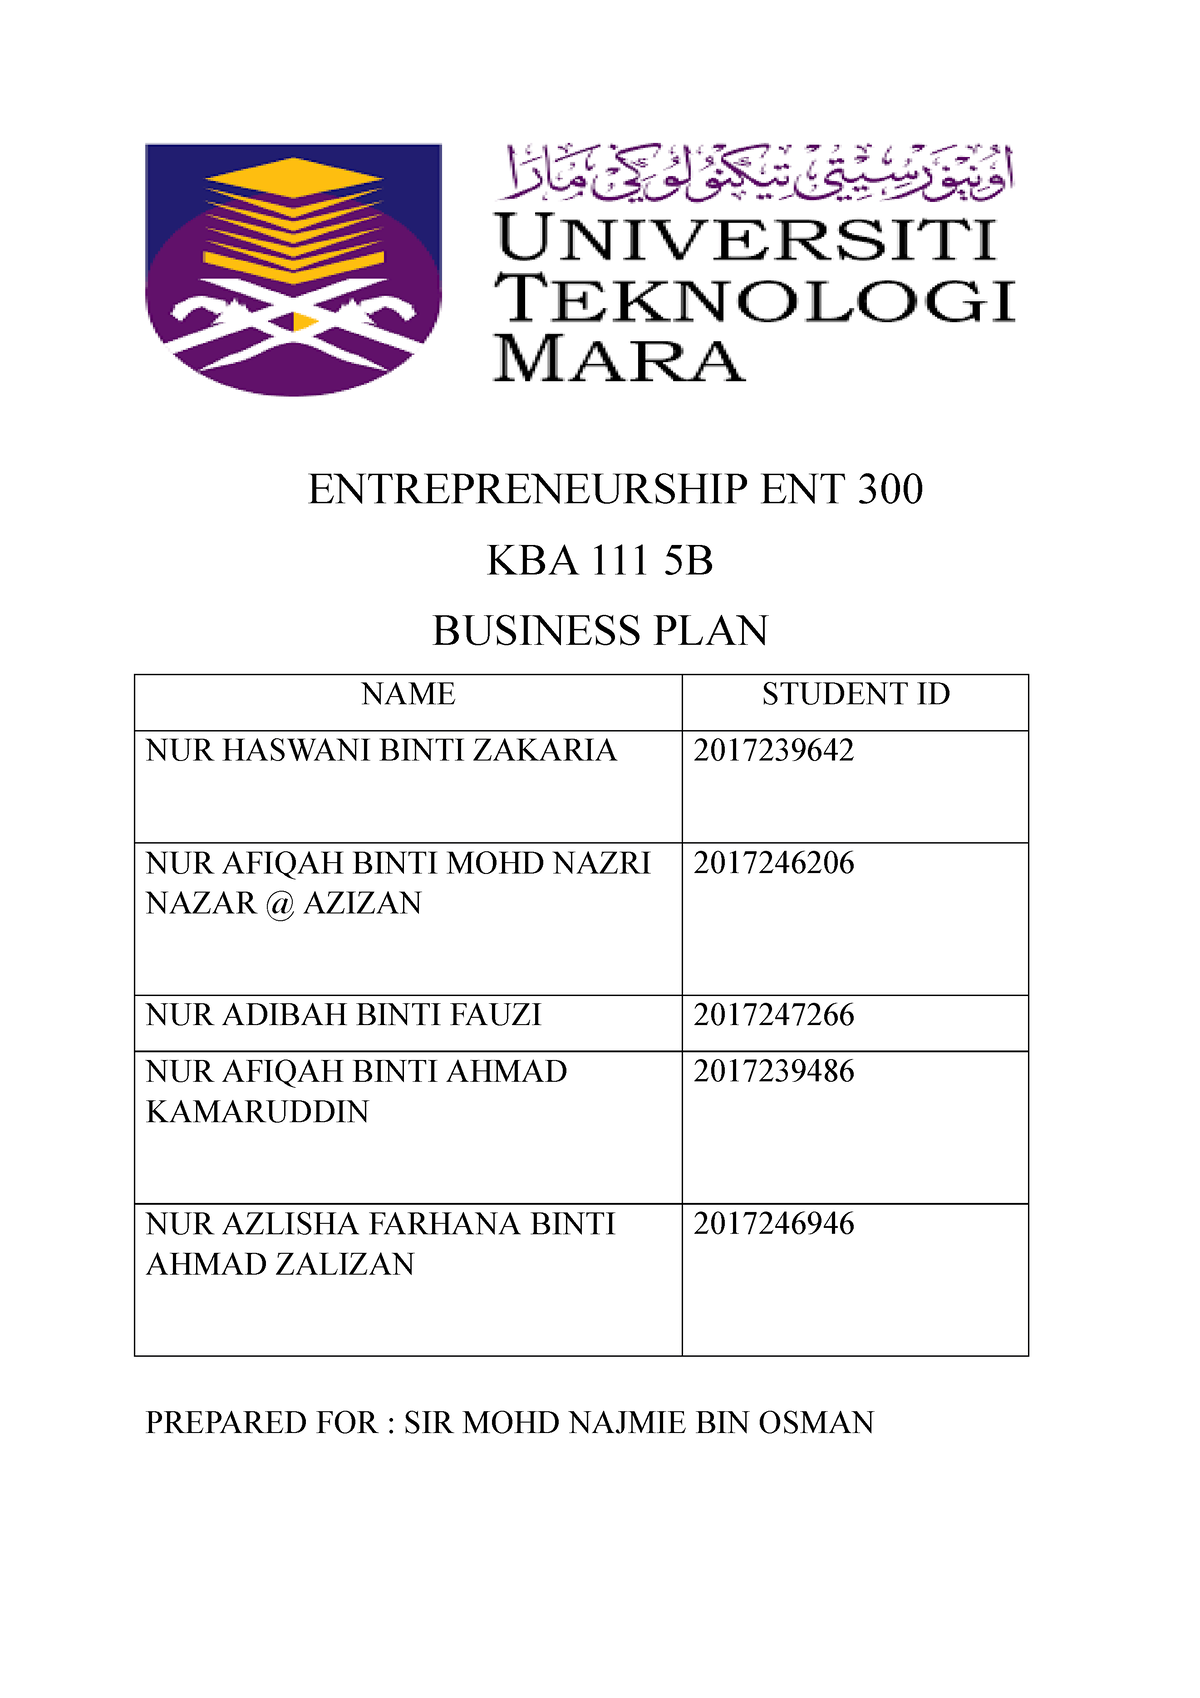 contoh business plan entrepreneurship